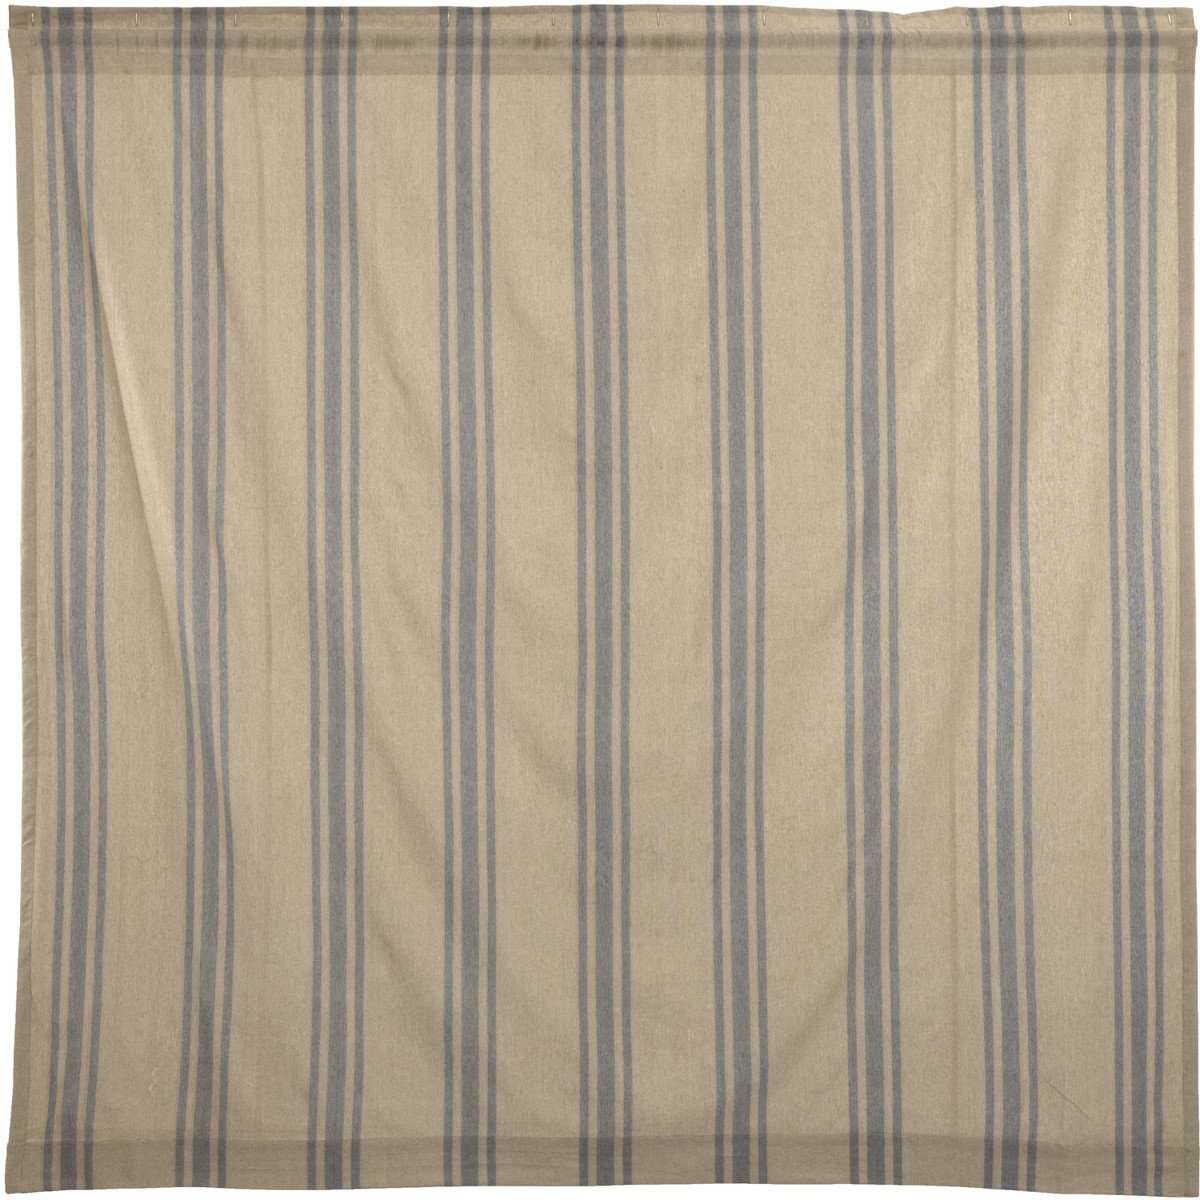 Farmer's Market Grain Sack Stripe Shower Curtain 72"x72" curtain VHC Brands 